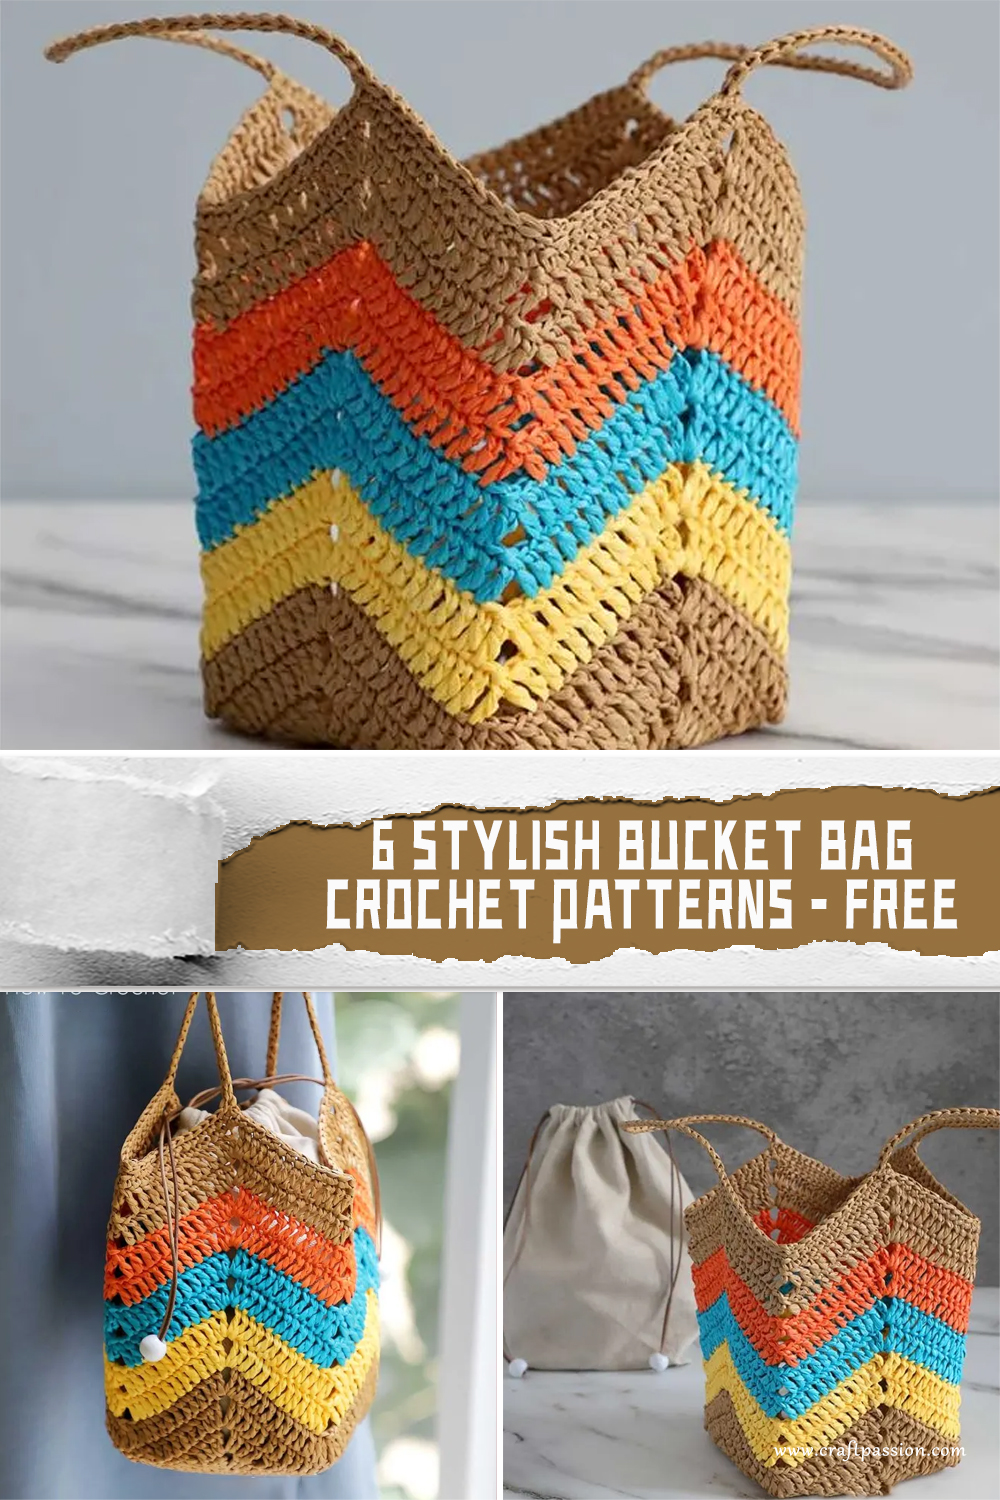 6 Chic Bucket Bag Crochet Patterns – FREE